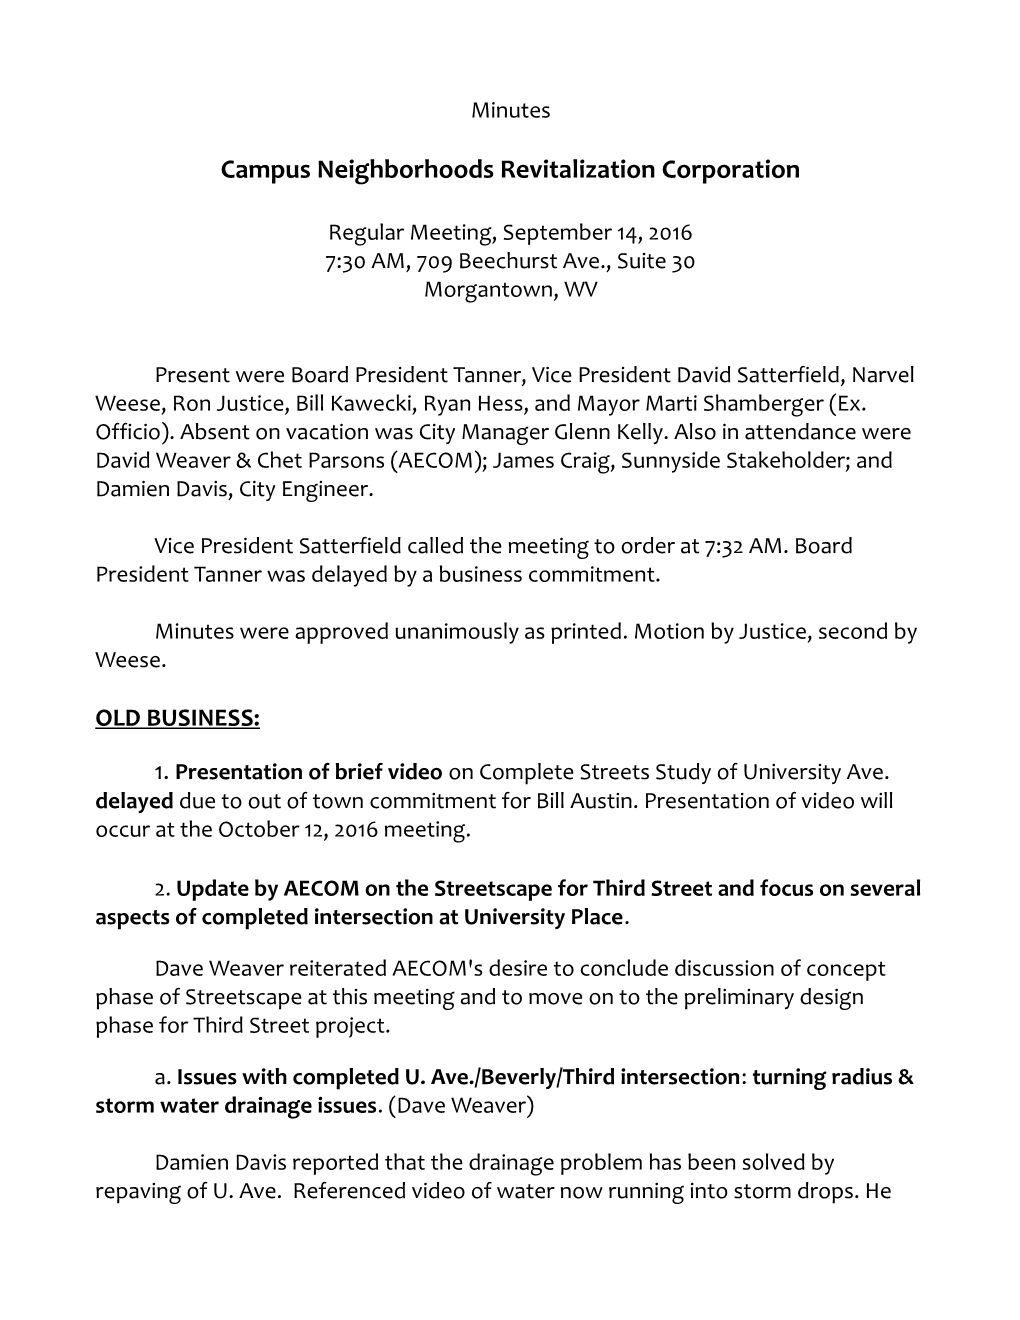 Campus Neighborhoods Revitalization Corporation s1